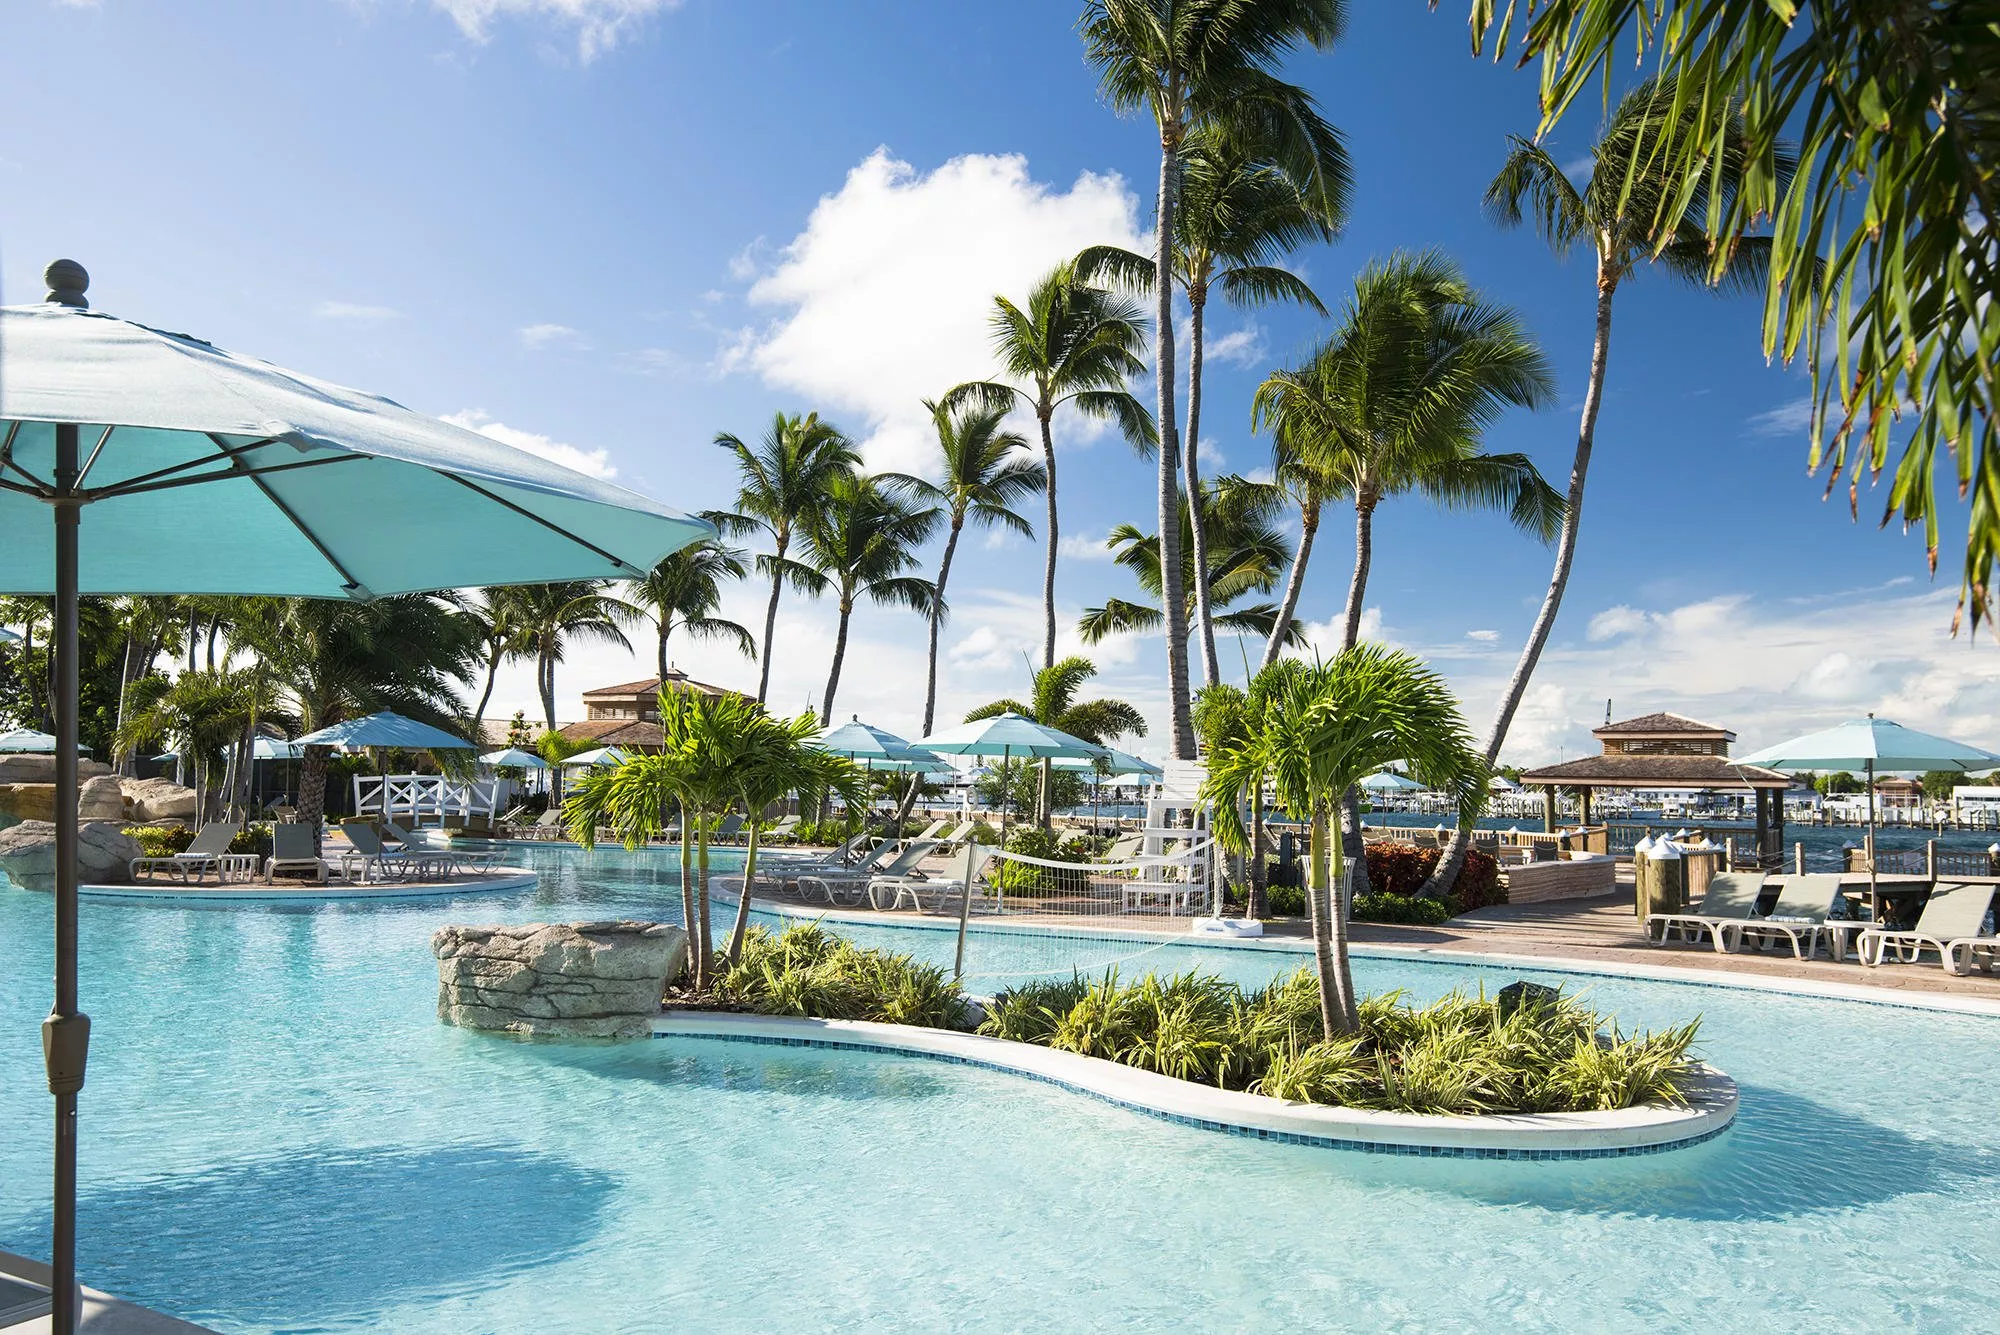 Warwick Paradise Island in Bahamas, Caribbean | Sex Hotels - Rated 3.4